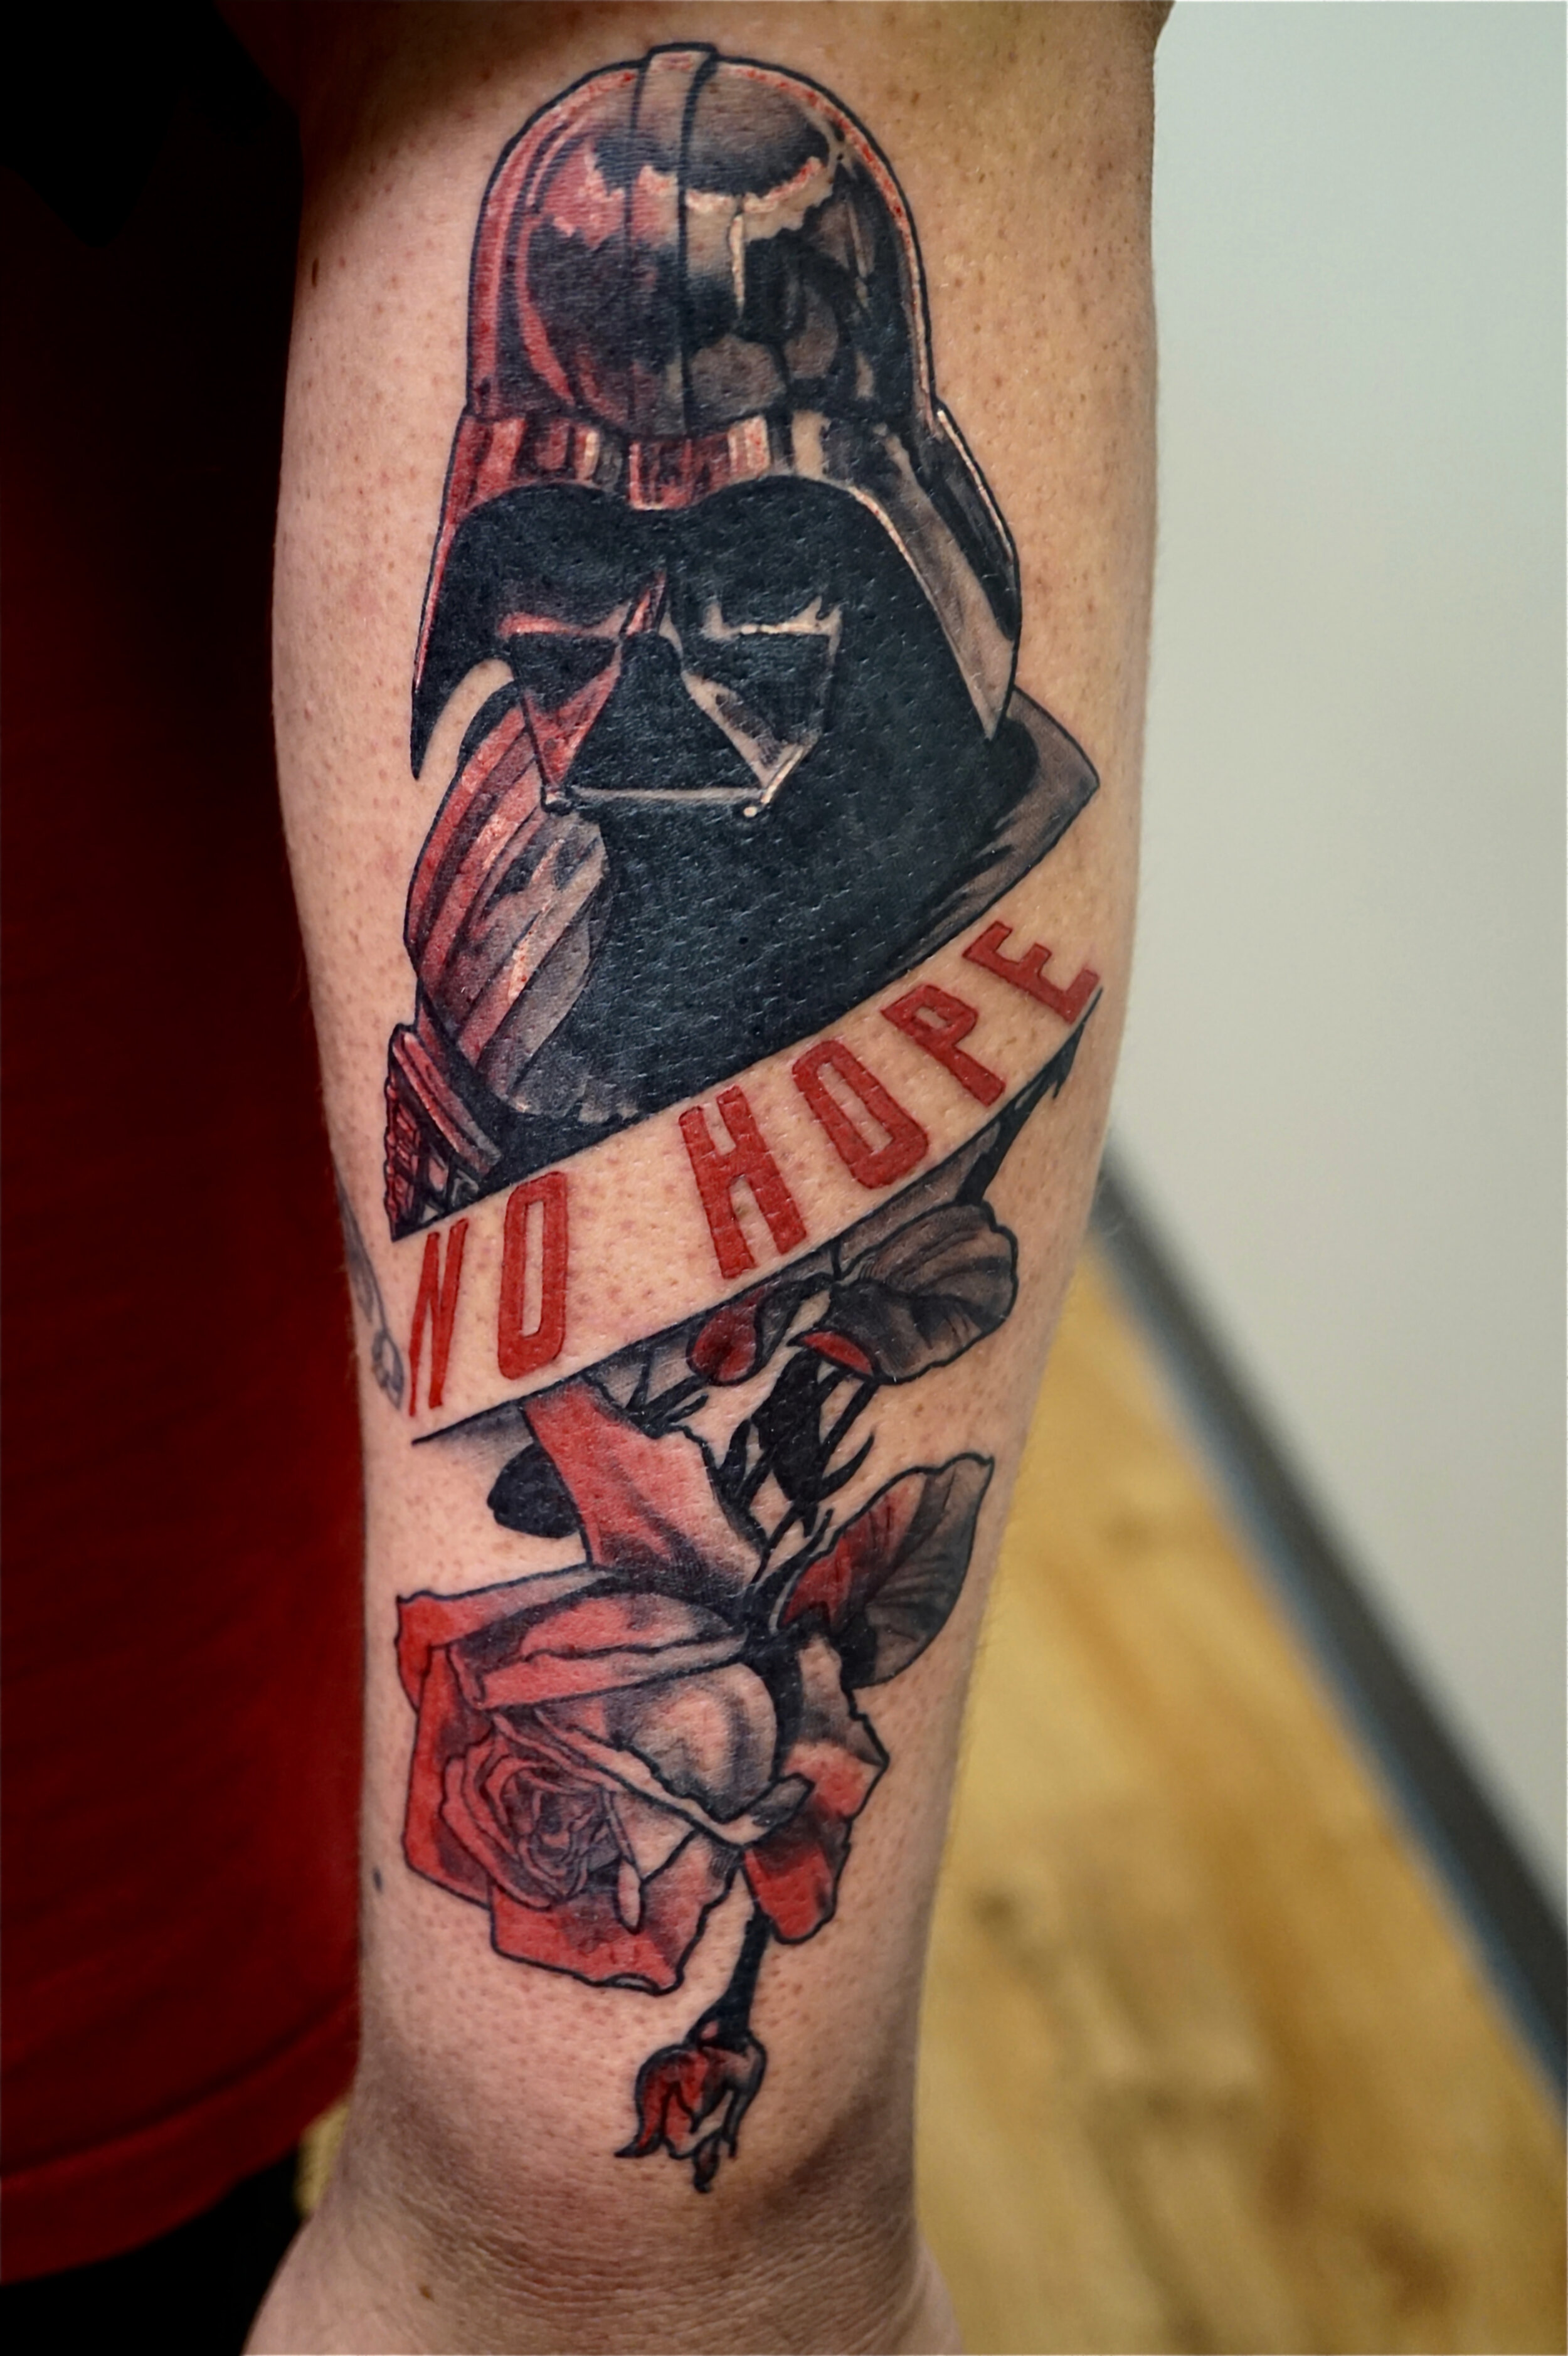 Darth-Vader-Starwars-Tattoo-Illustrative-Blackwork.JPG